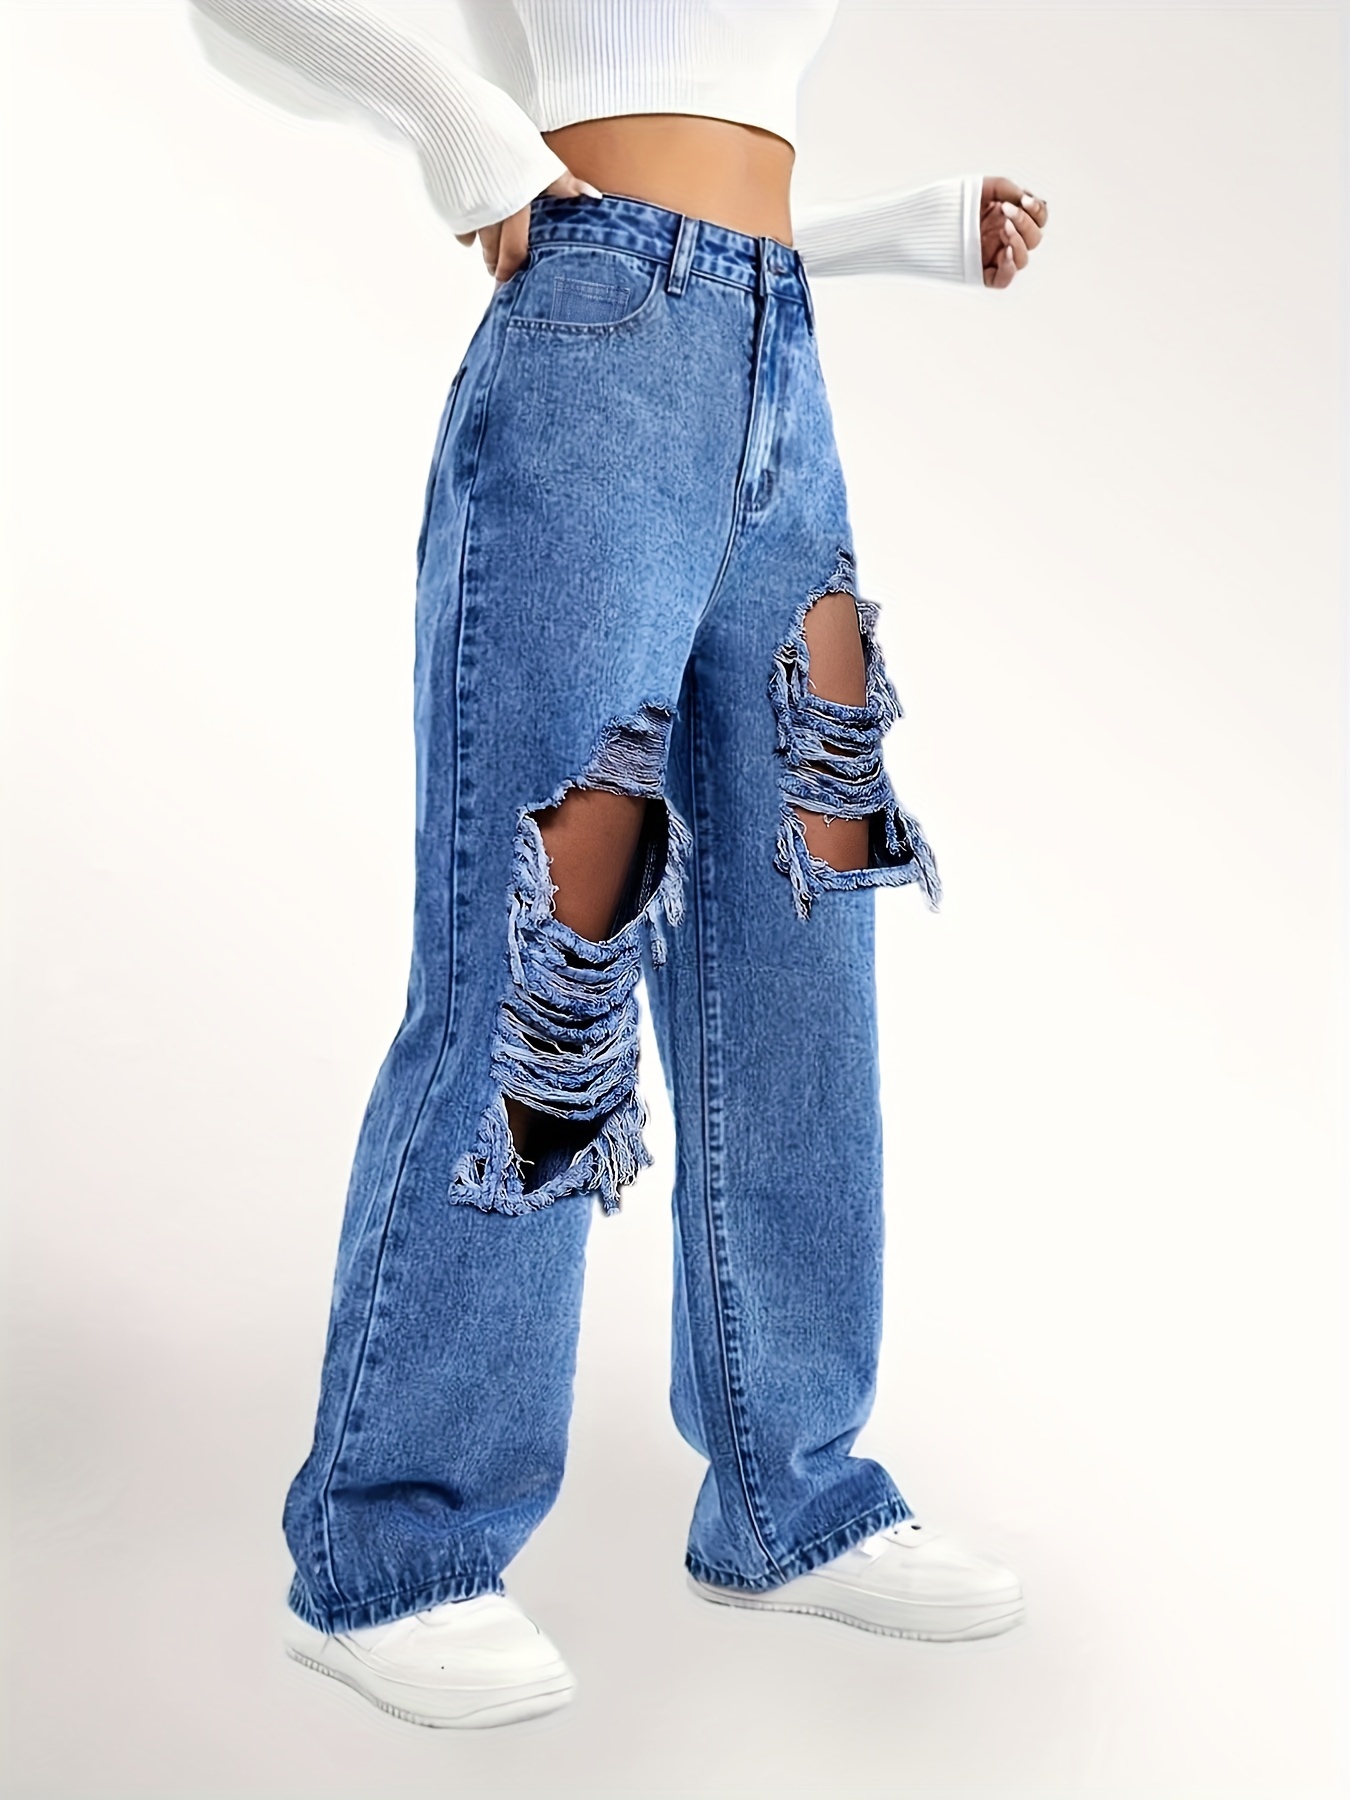 Moda Loose Girls Jeans Pantalones Anchos De Cintura Alta